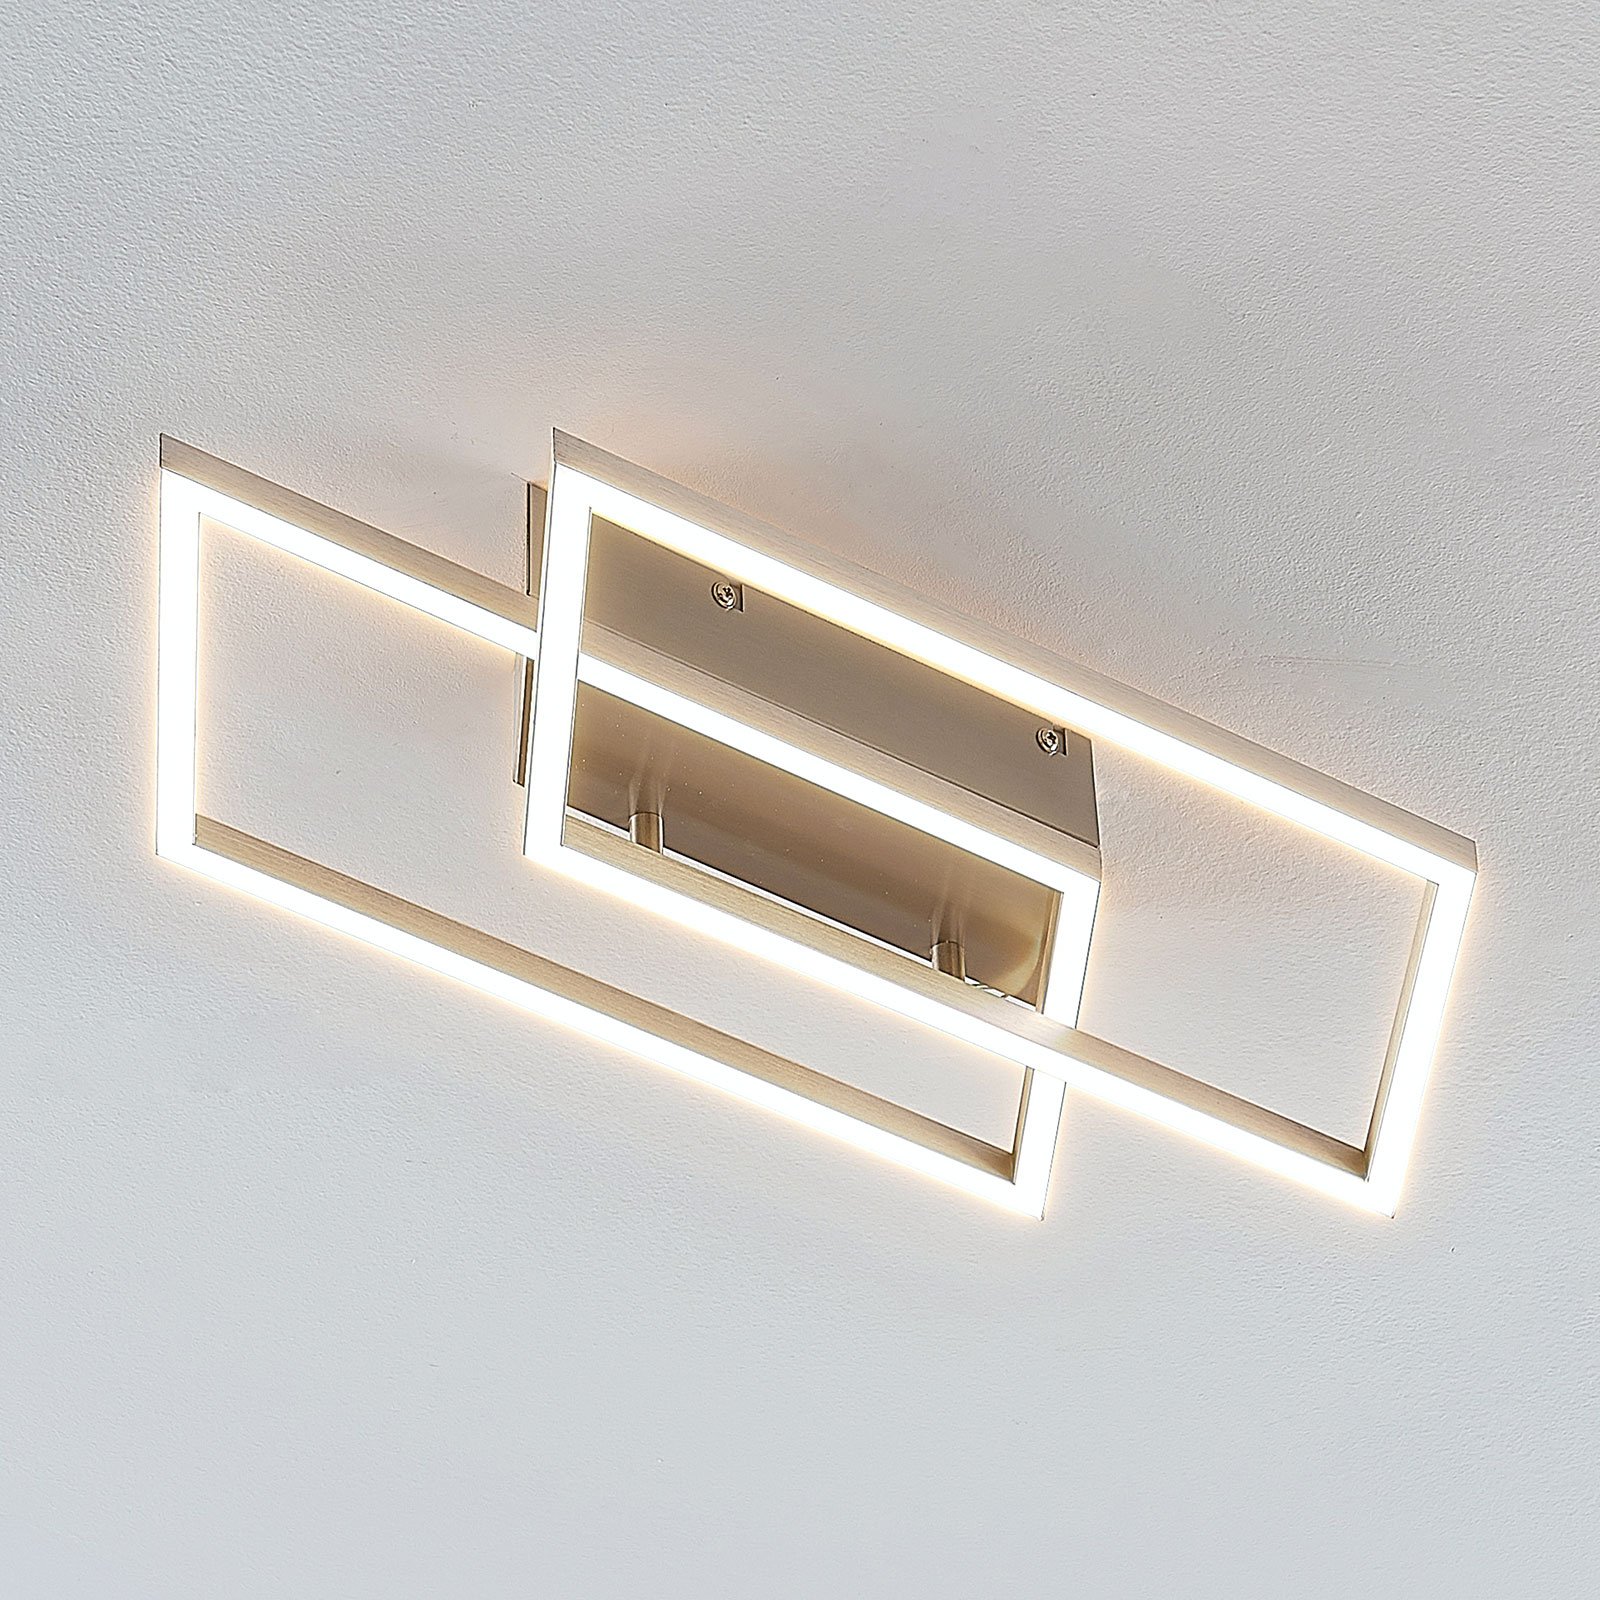 Quadra LED ceiling light, dimmable via switch